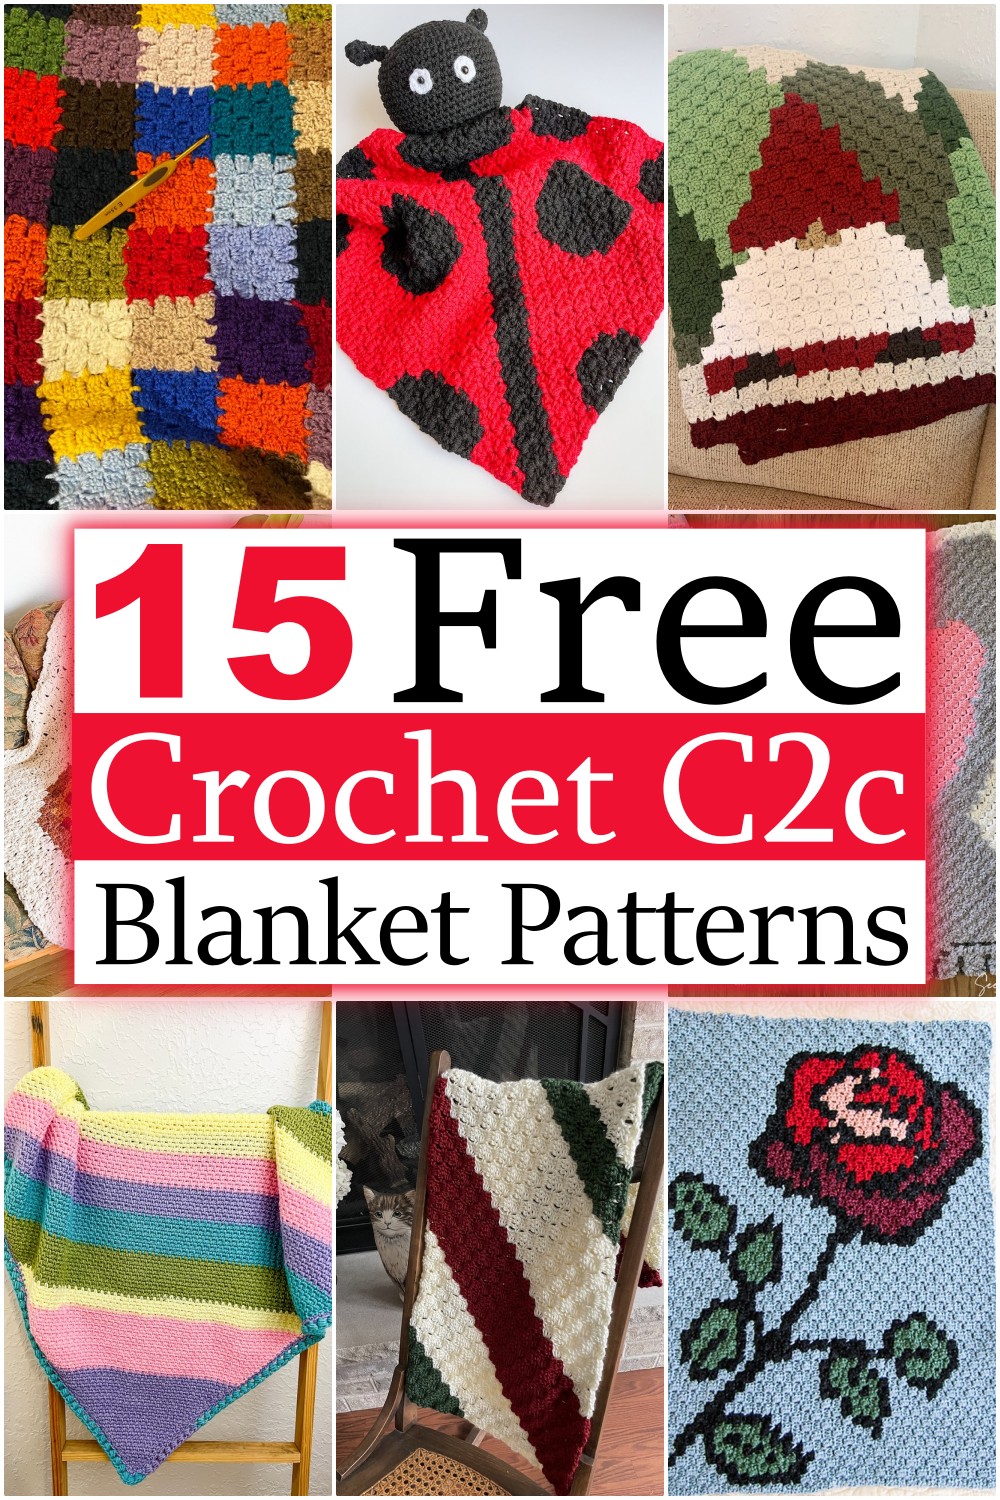 Crochet C2c Blanket Patterns 